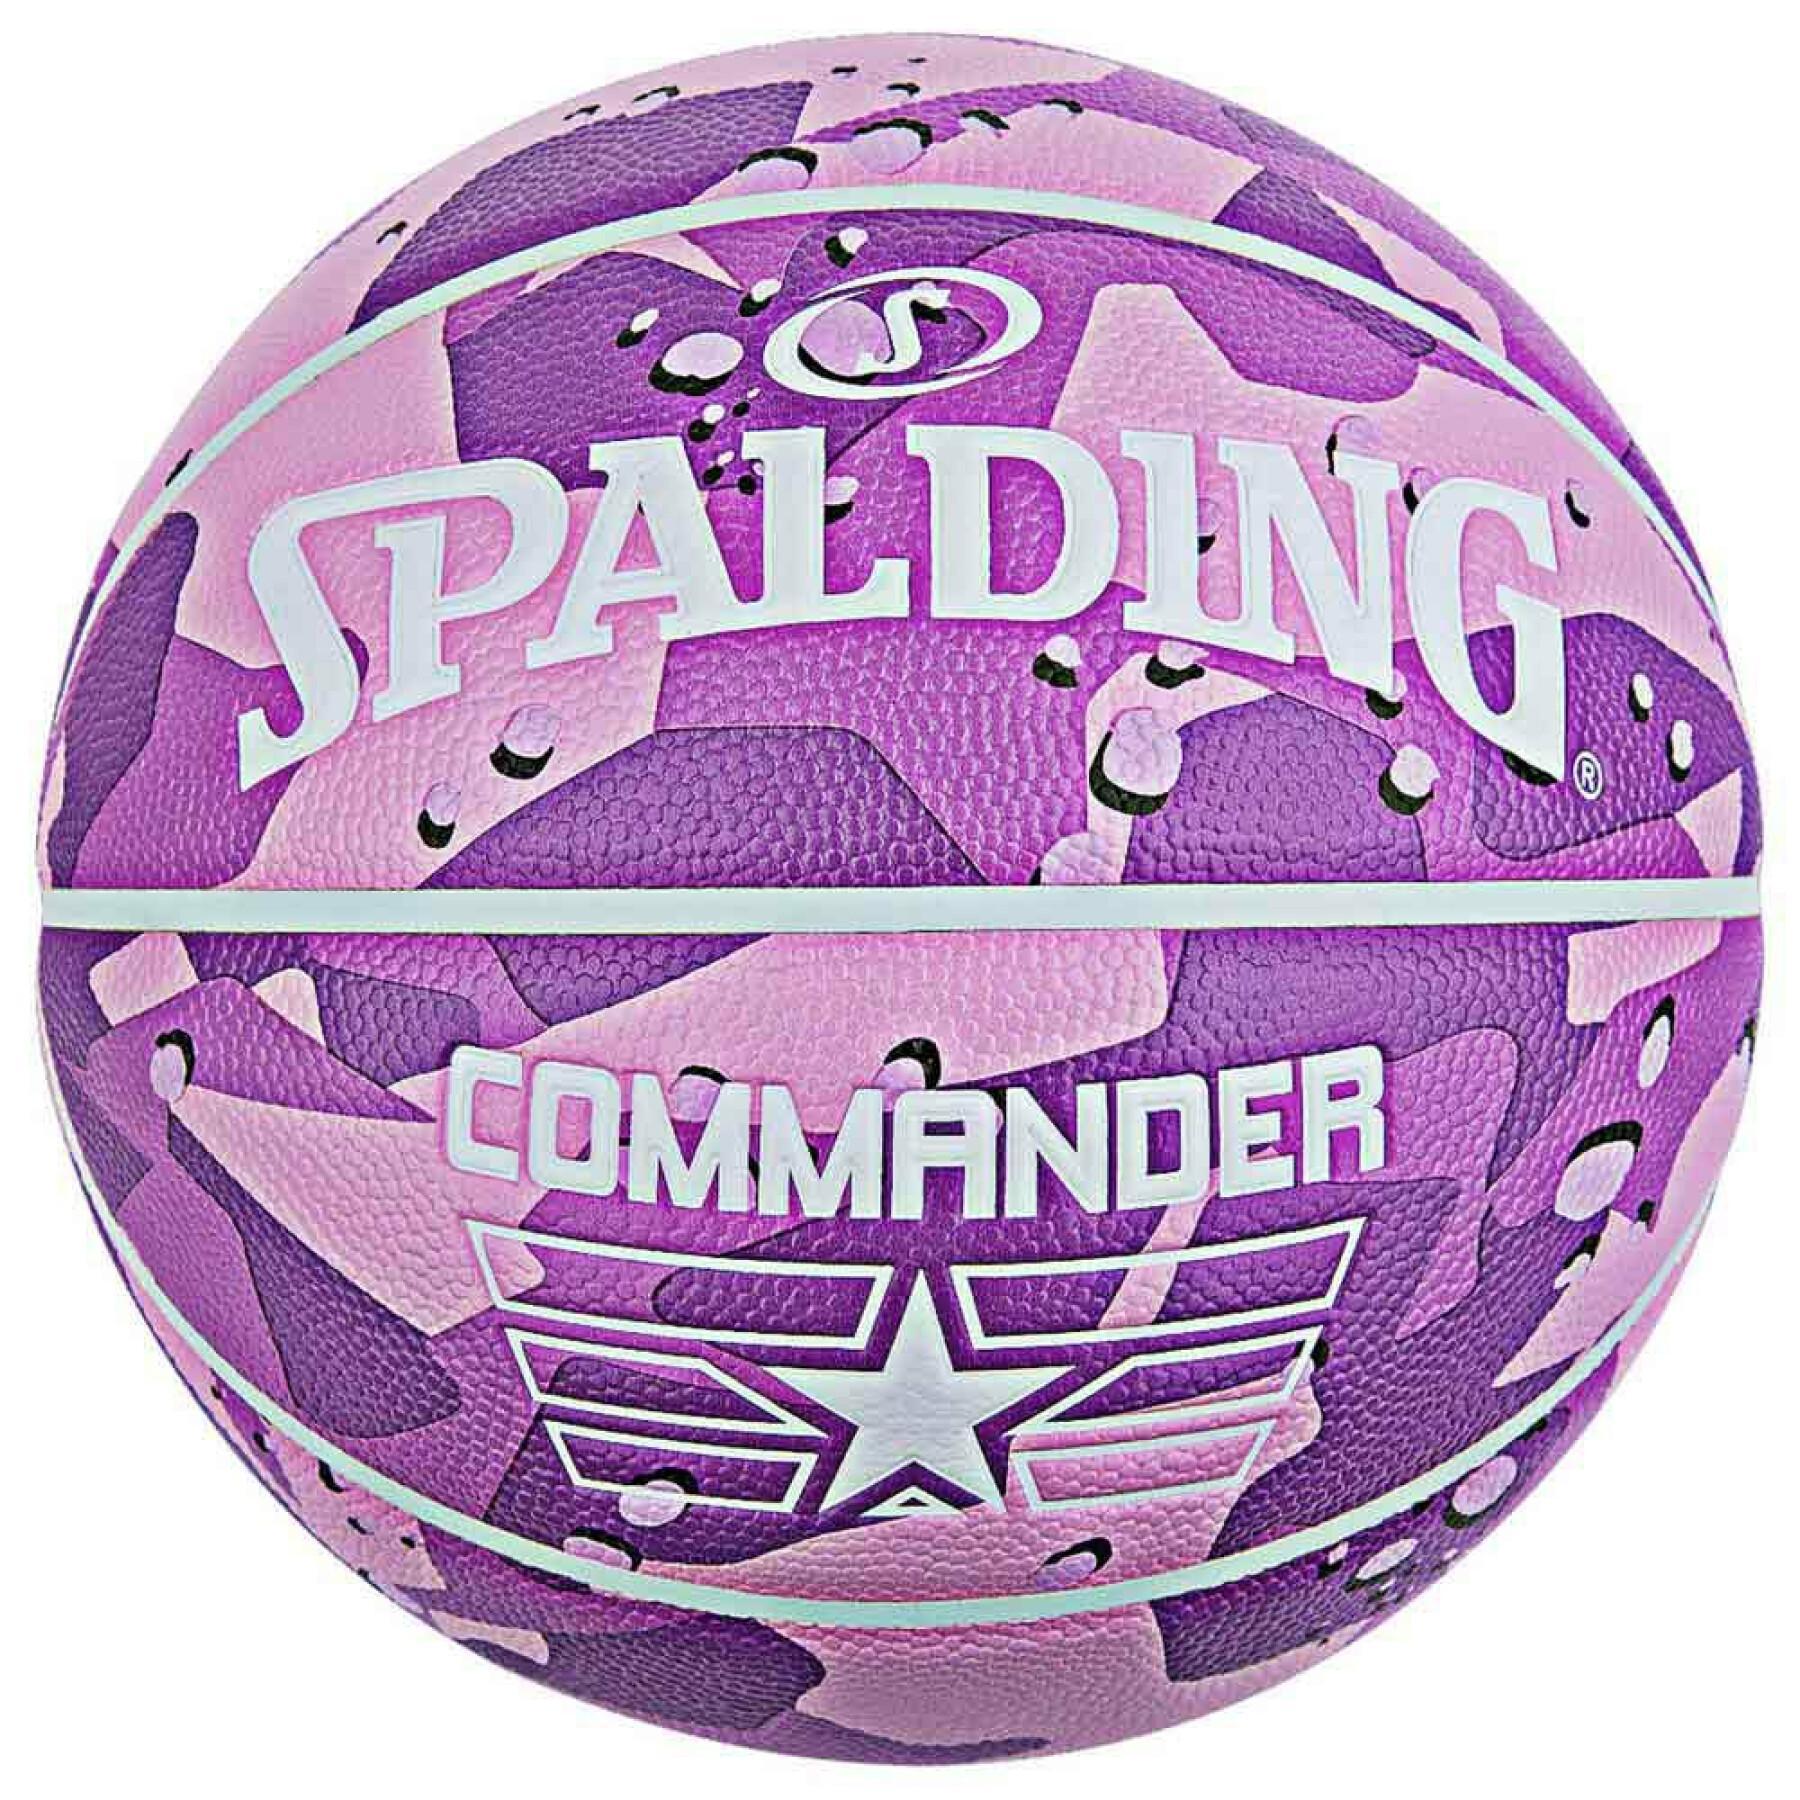 Pallone da basket Spalding Commander